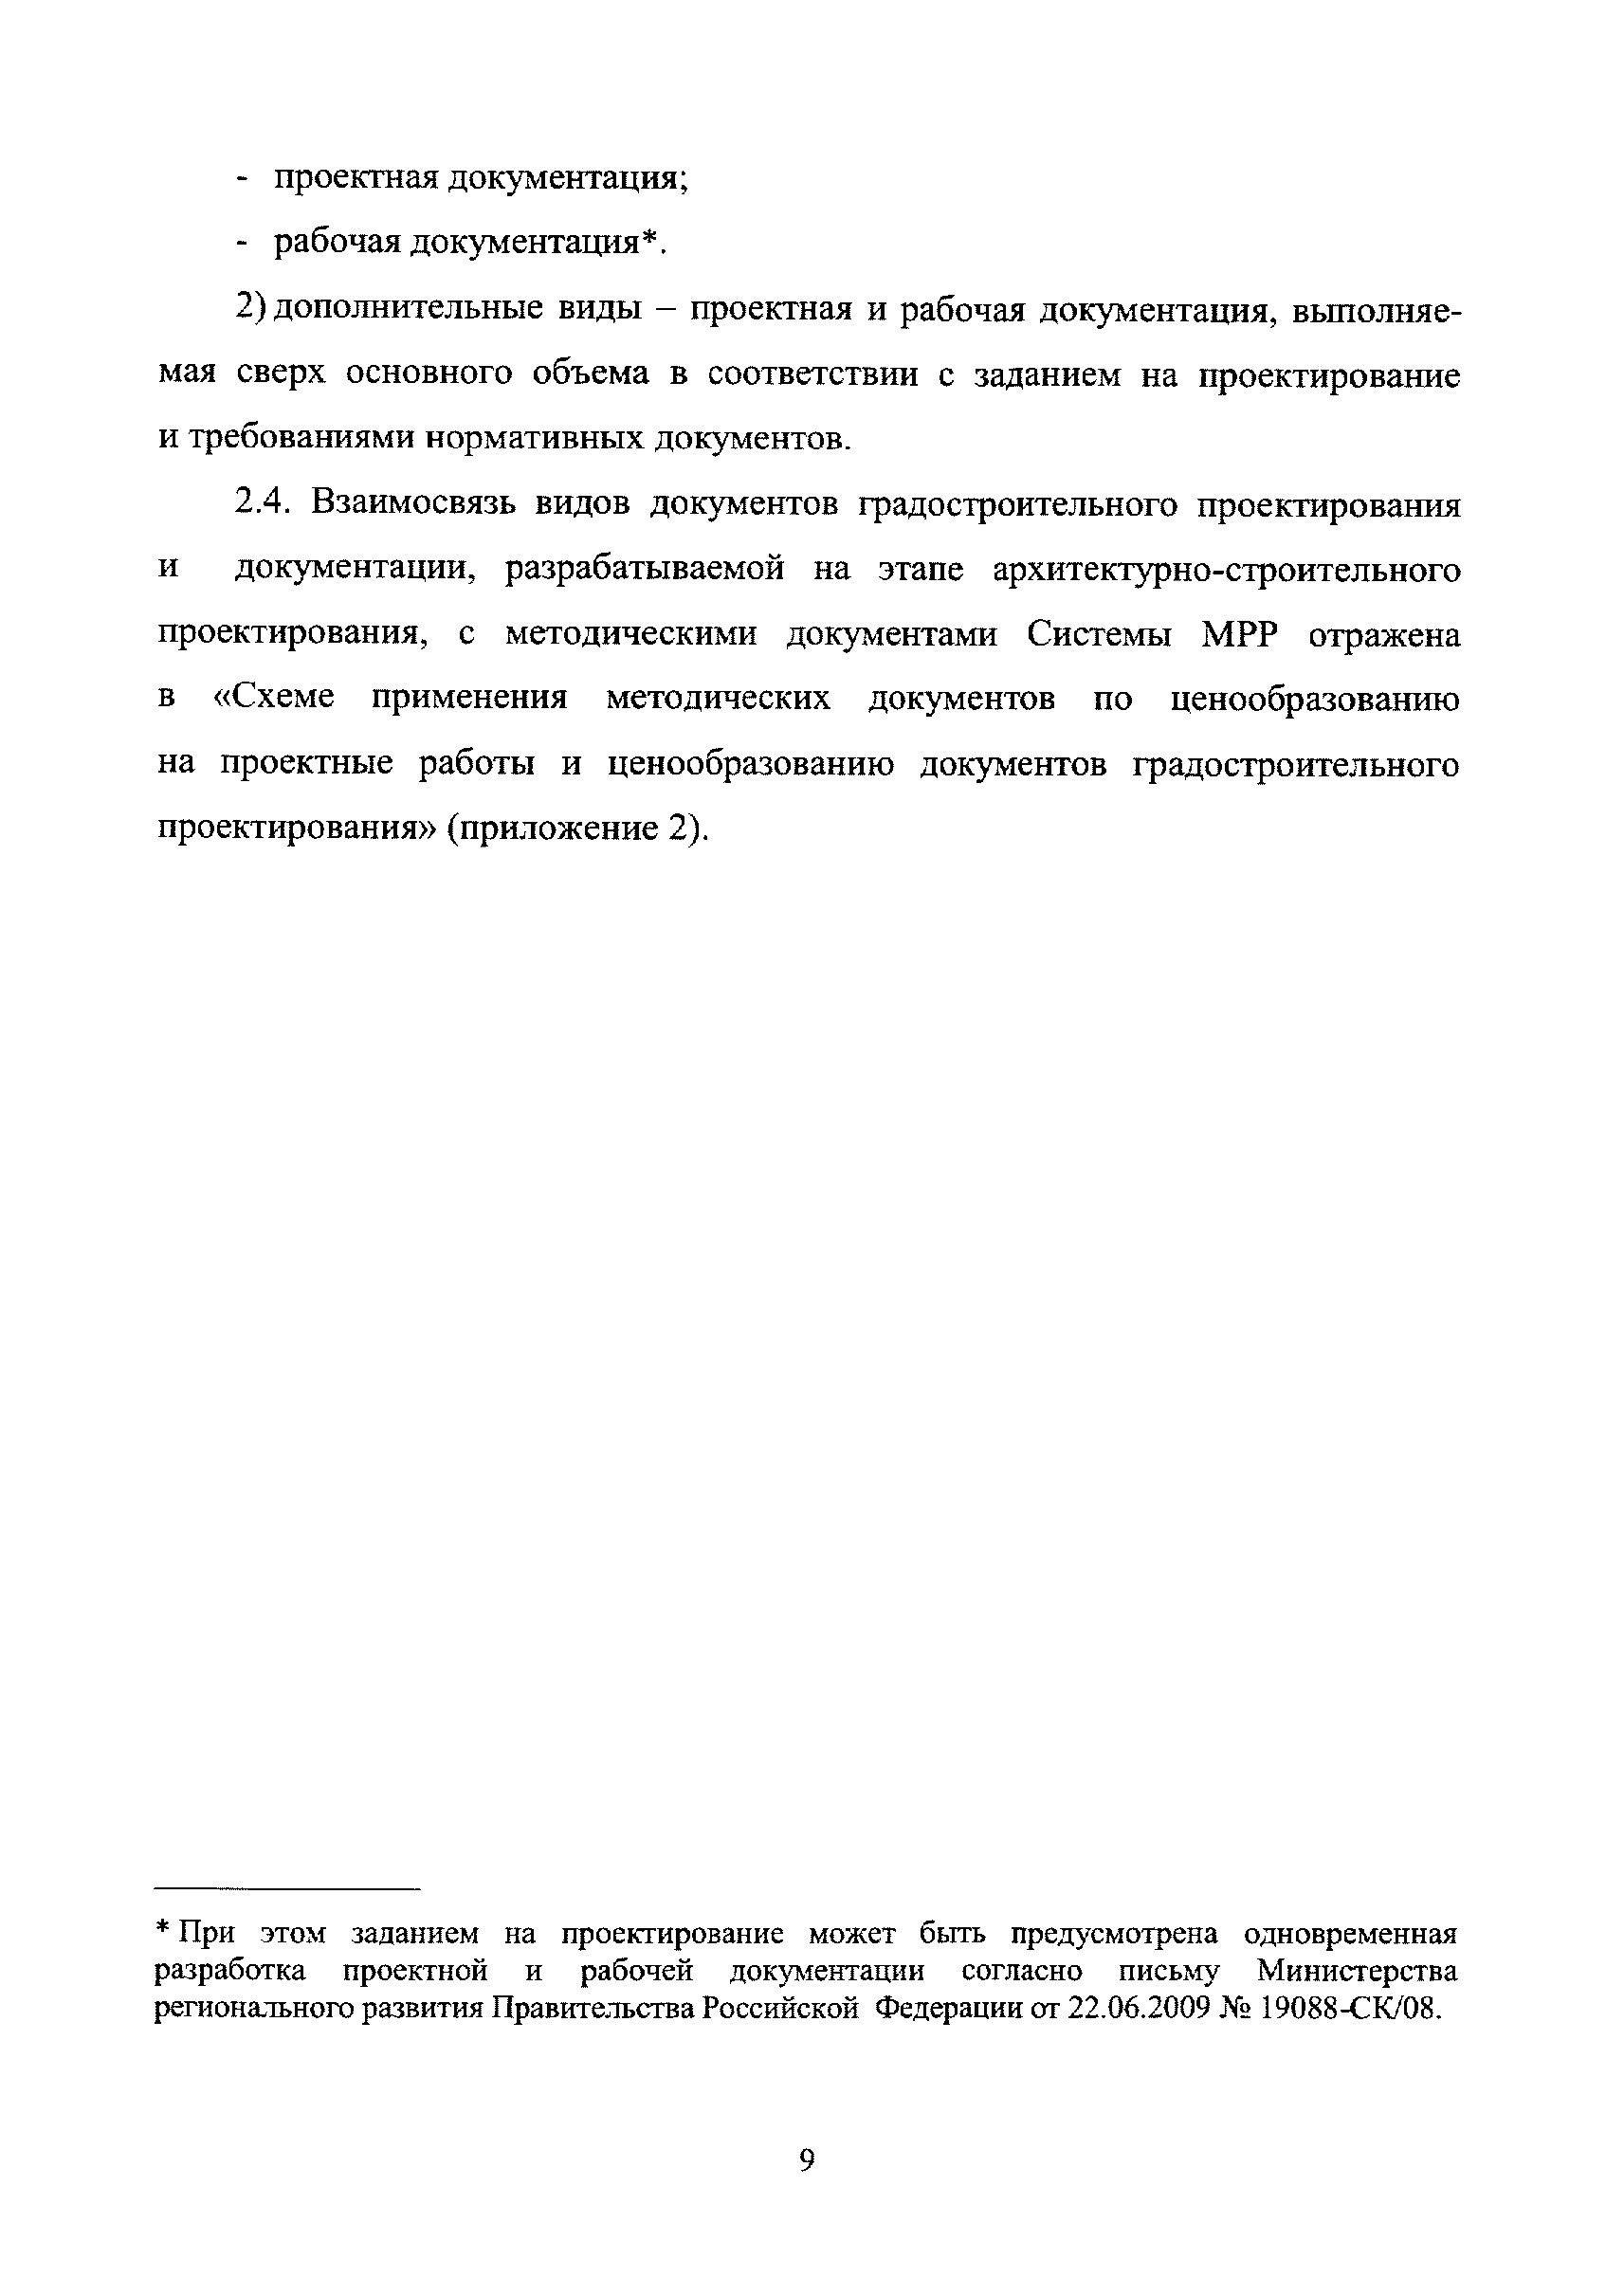 МРР 3.2.01.04-15